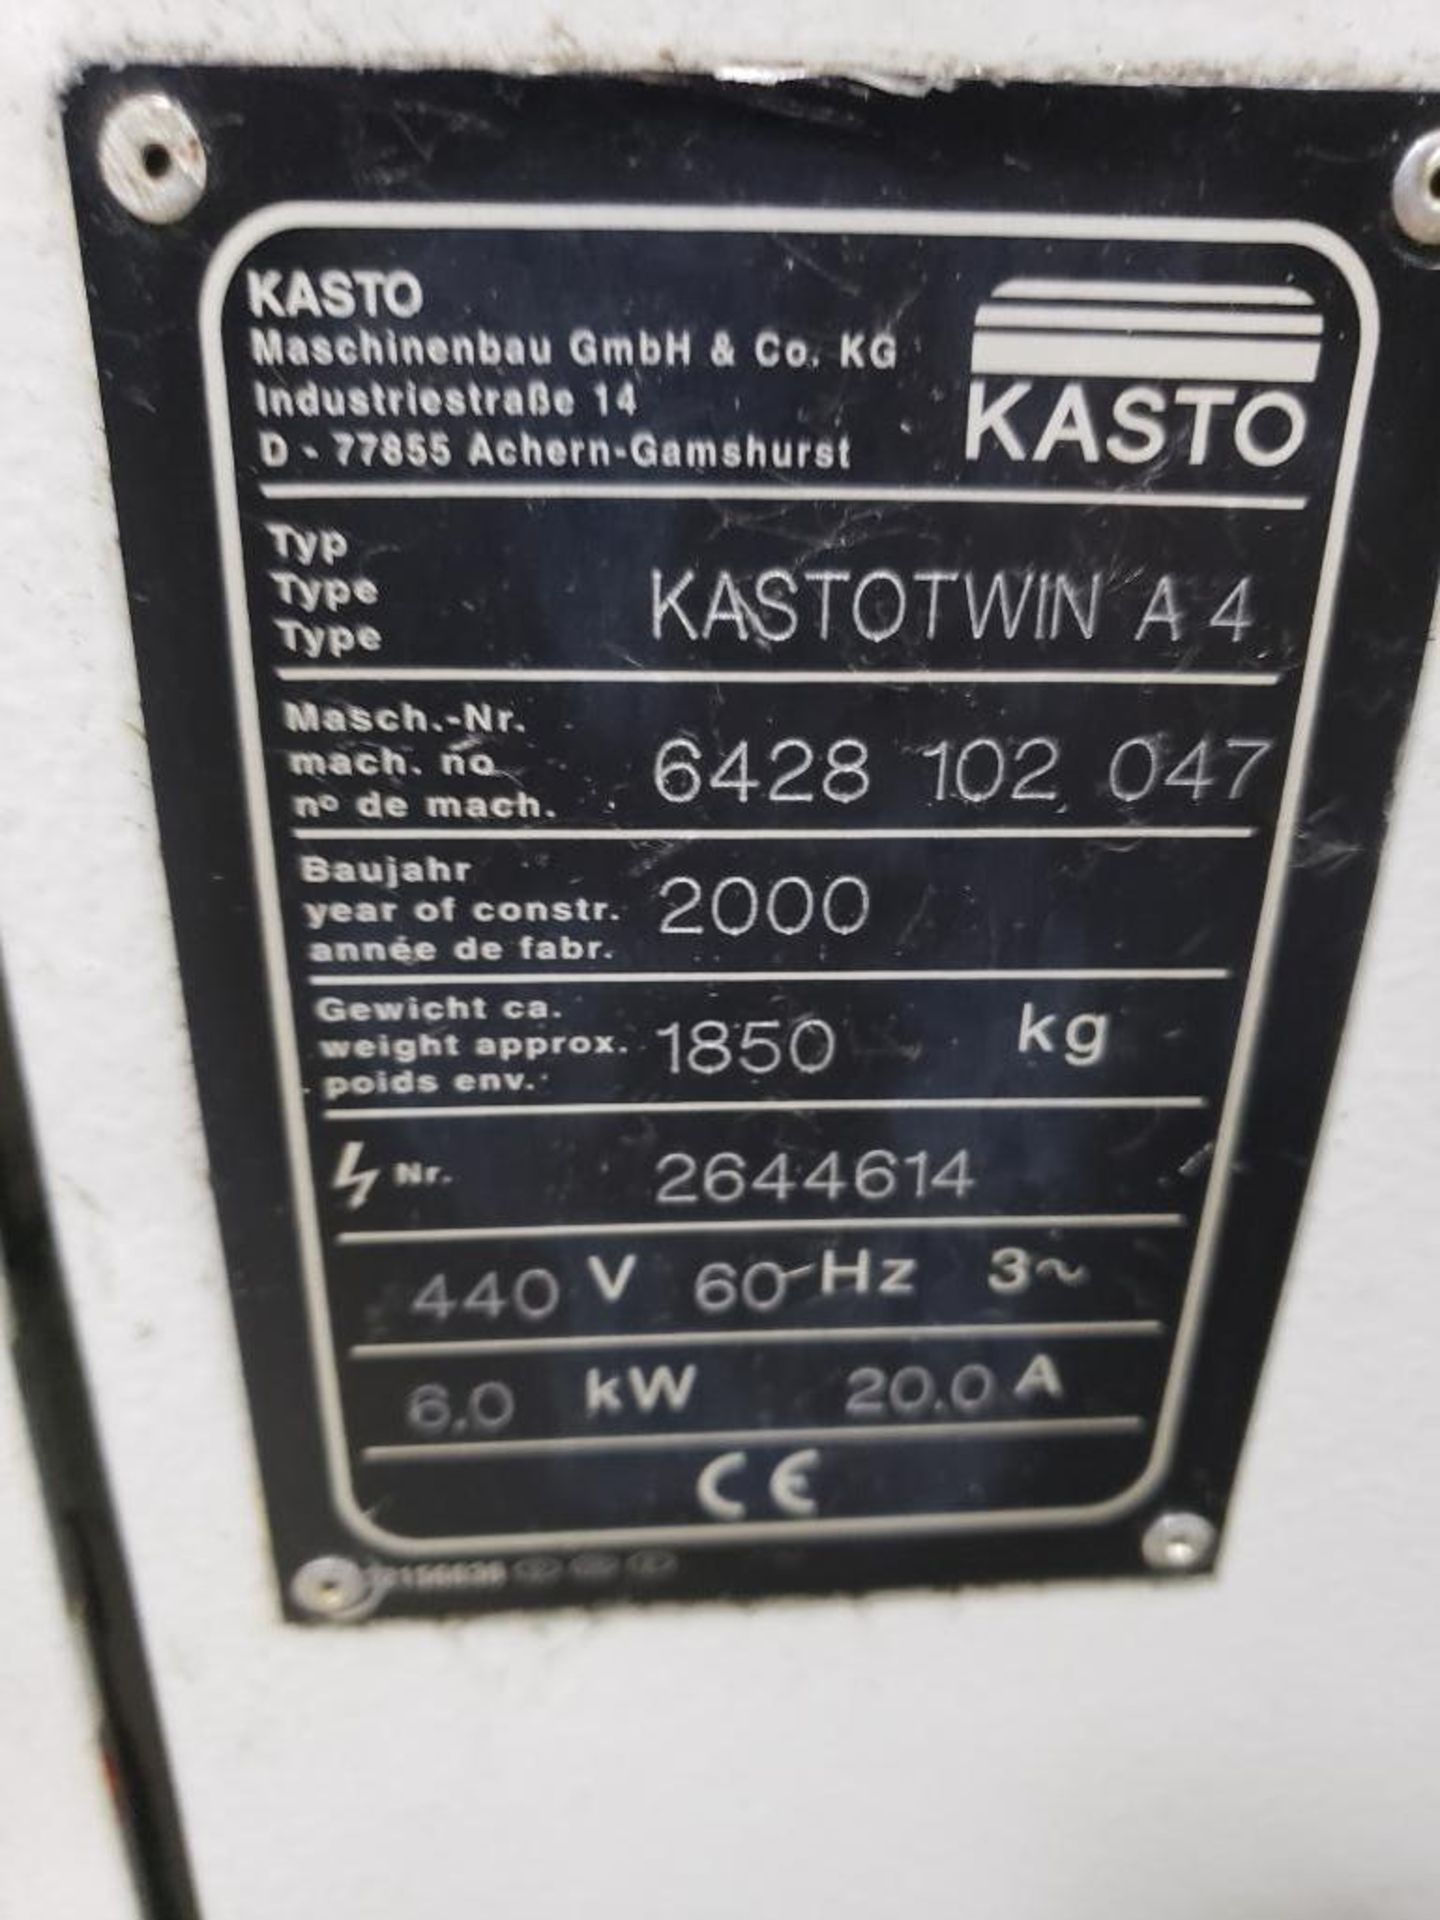 Kasto horizontal CNC band saw Model Kastotwin A4, 3 phase 440v, Mfg year 2000. Serial # 6428102047. - Image 17 of 32